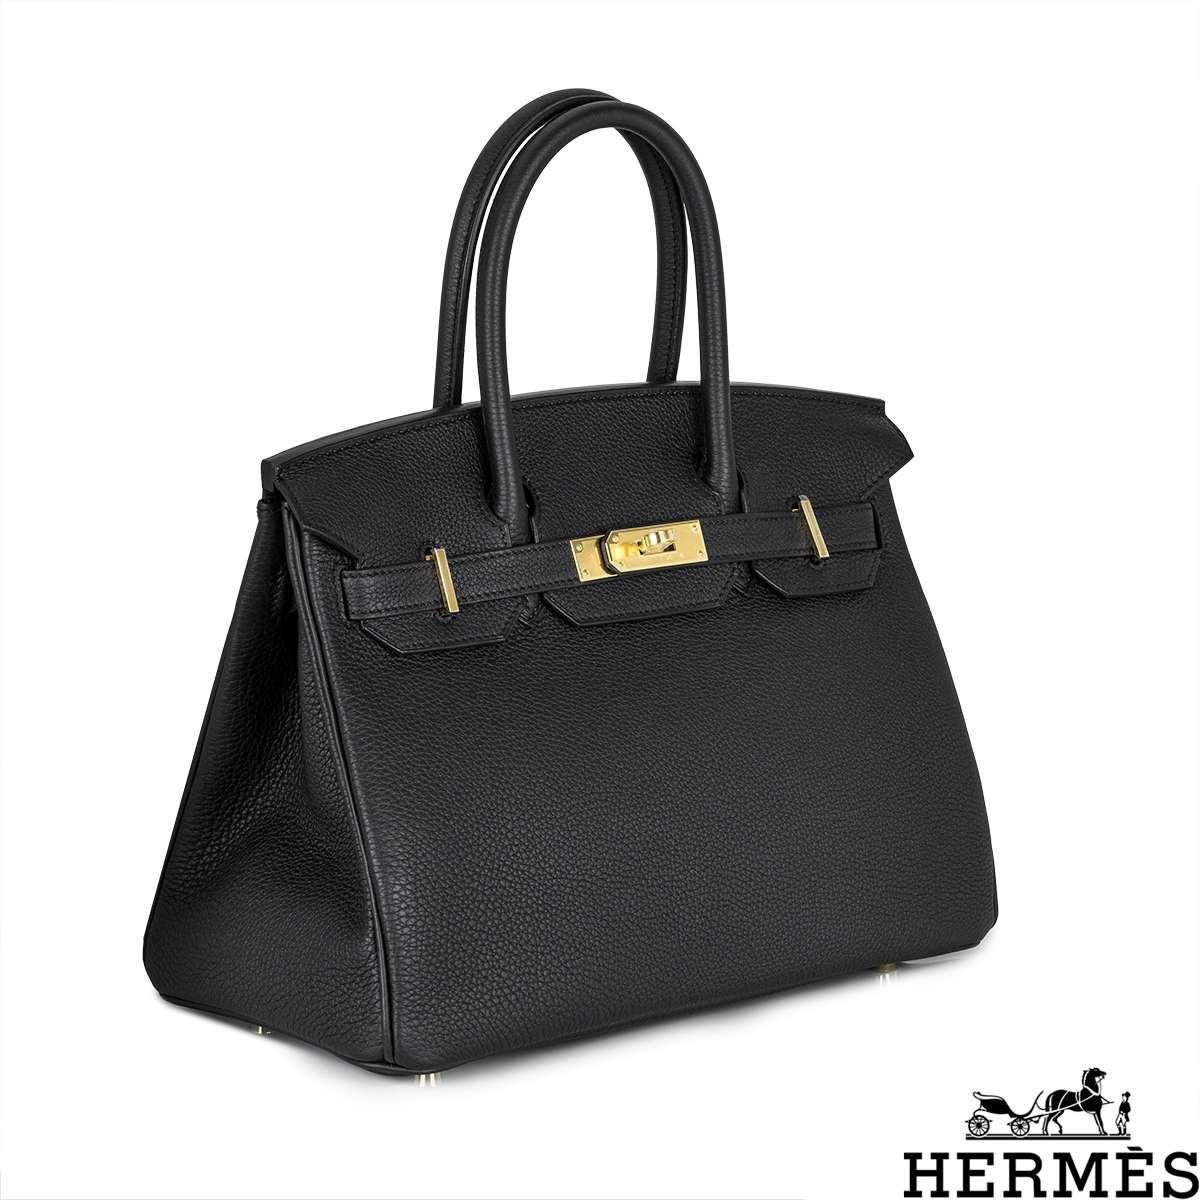 Hermès Birkin 30cm Noir Veau Togo GHW In New Condition For Sale In London, GB